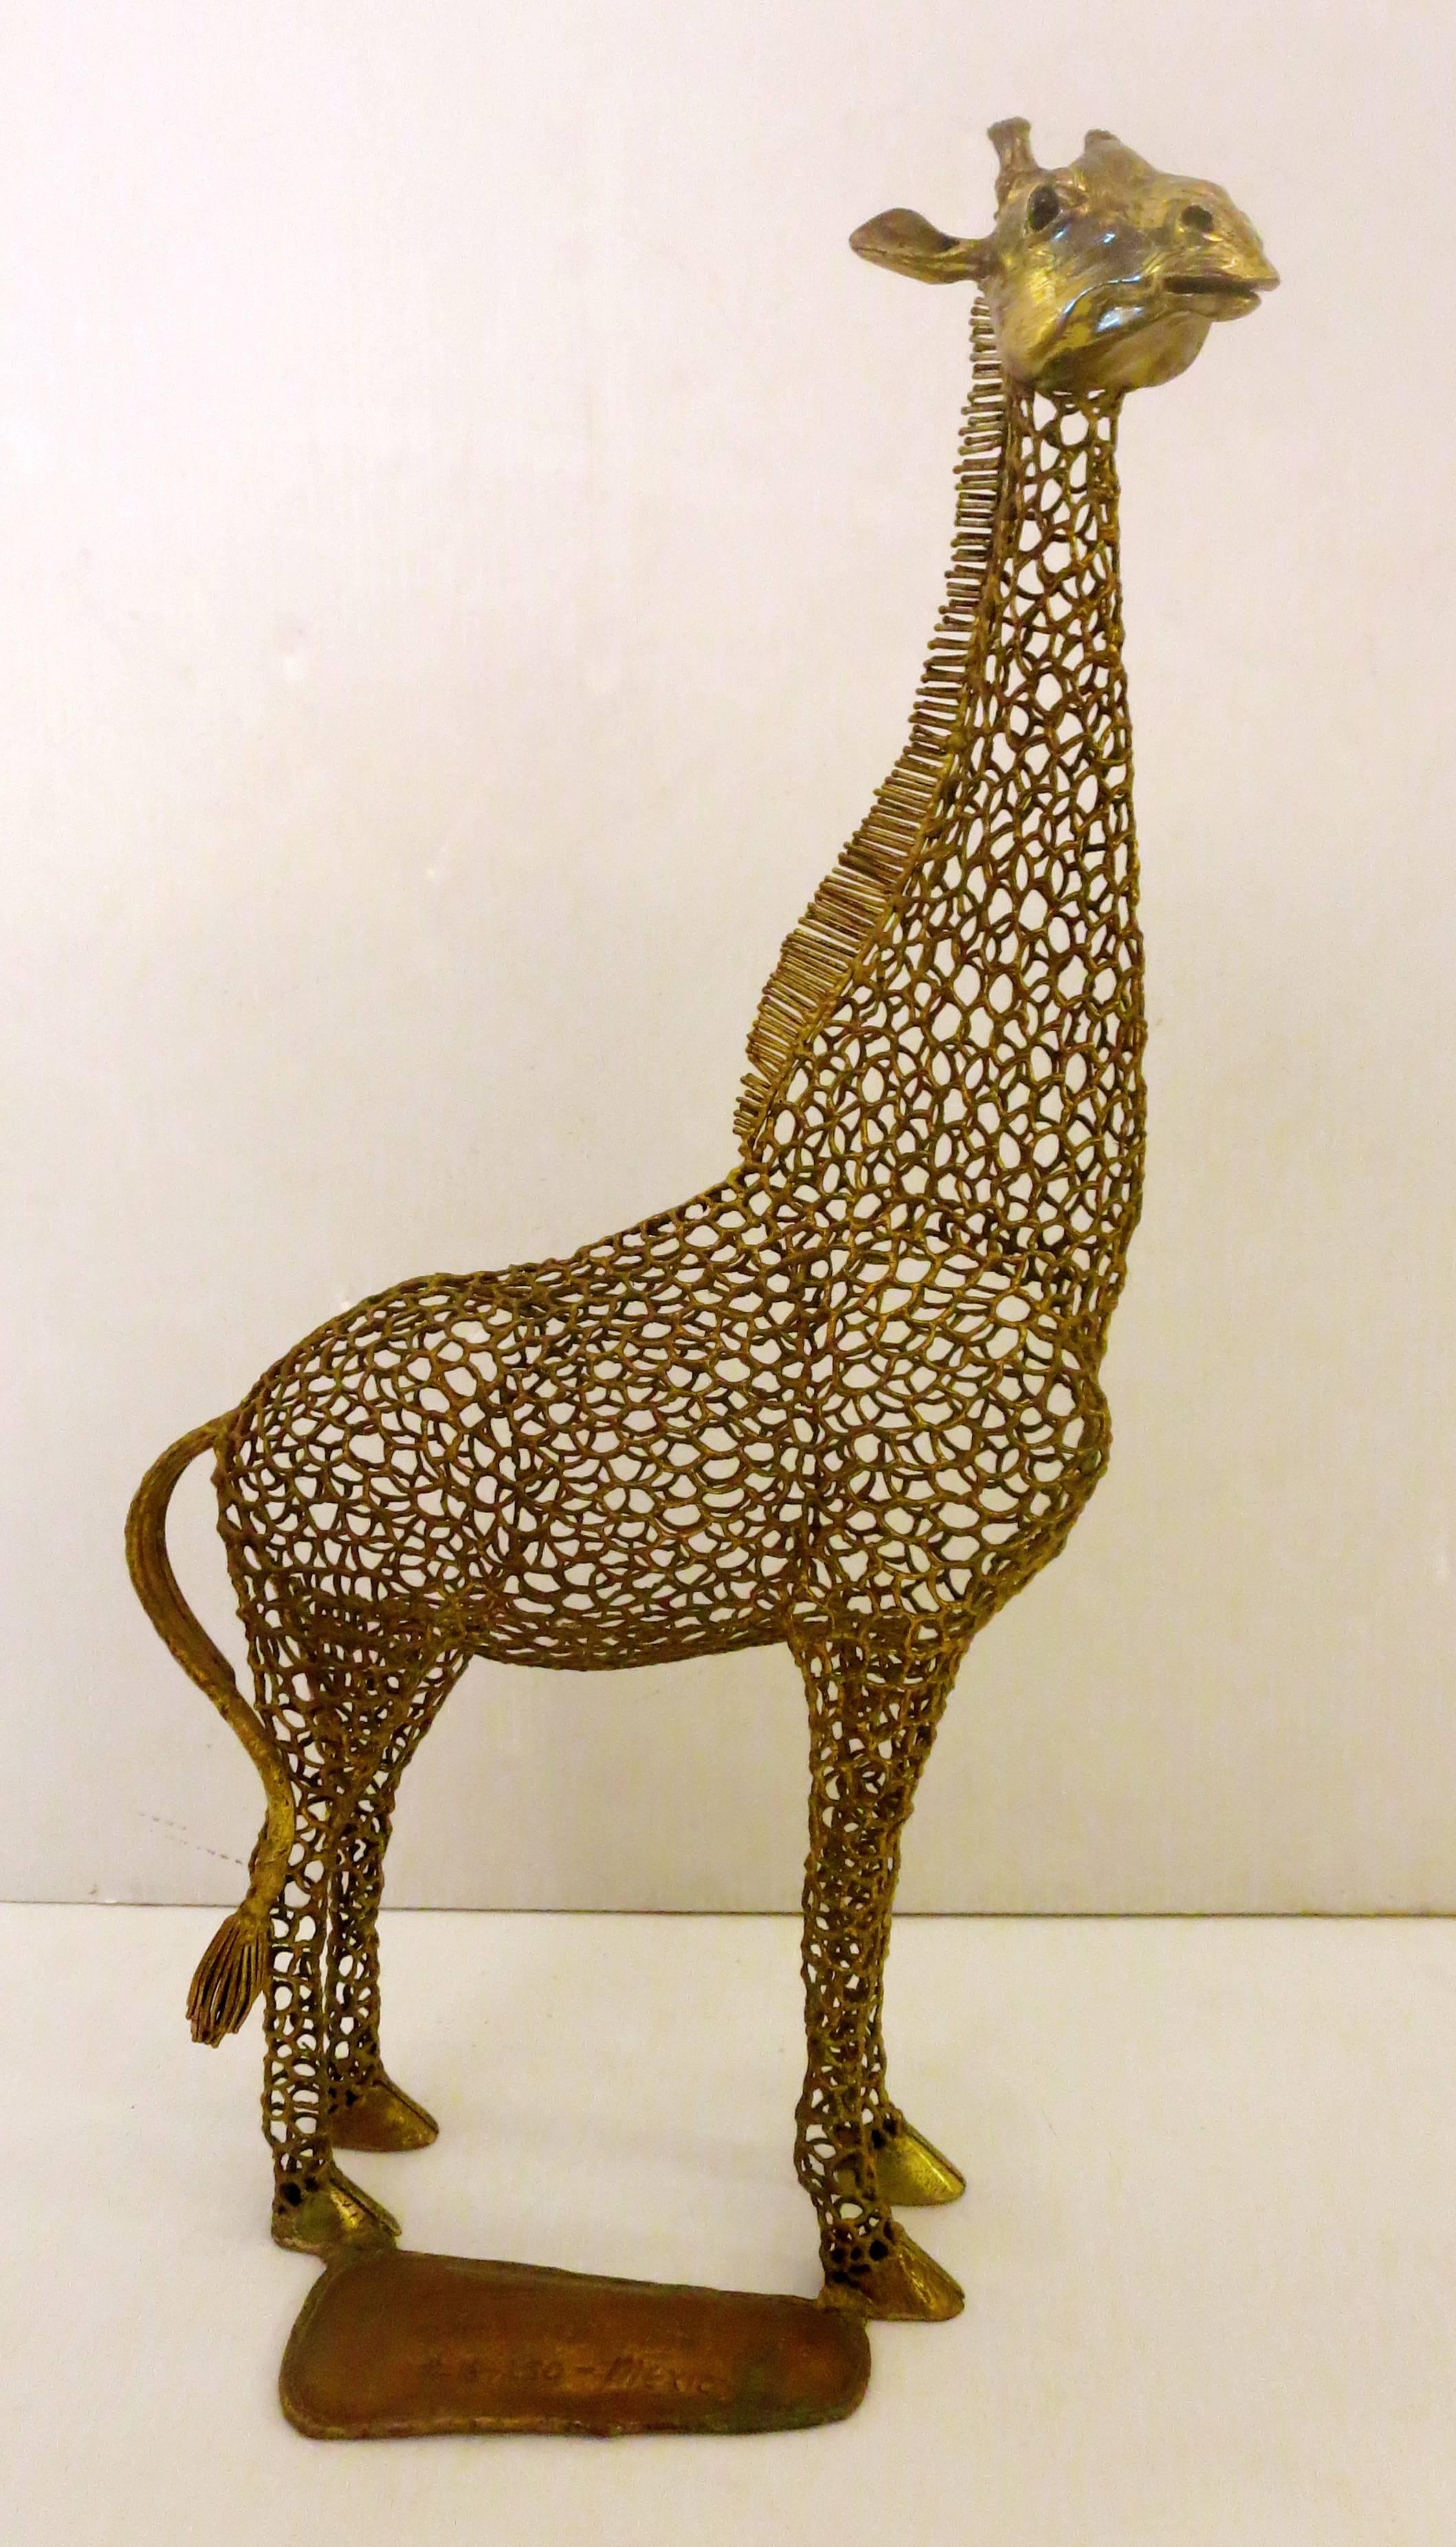 North American 1970s Rare Tall Brass Giraffe Sculpture by Mexican Artist Luciano Bustamante 